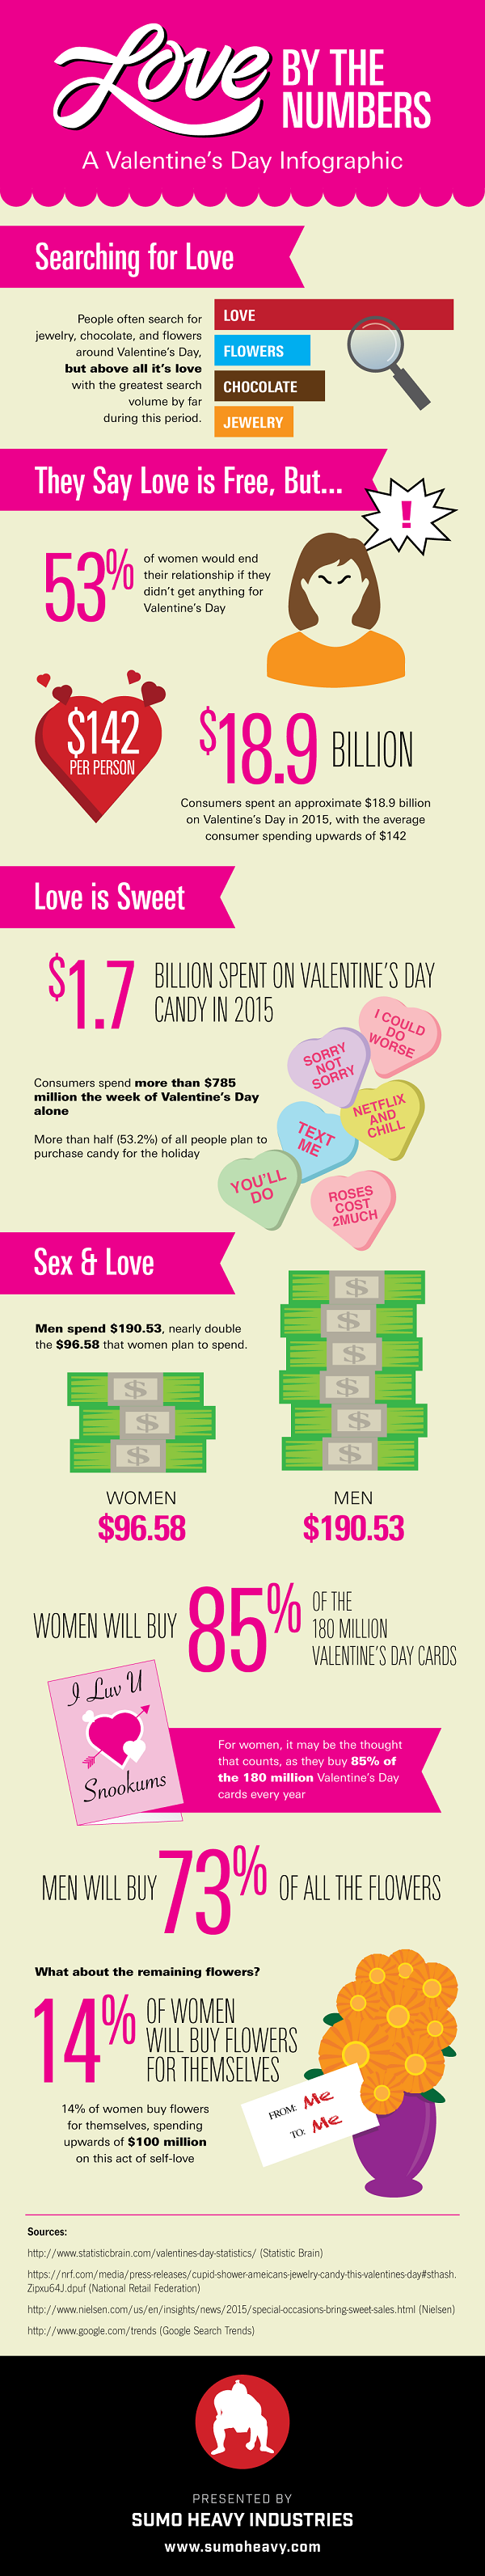 Valentines-Day-Infographic-0127-5